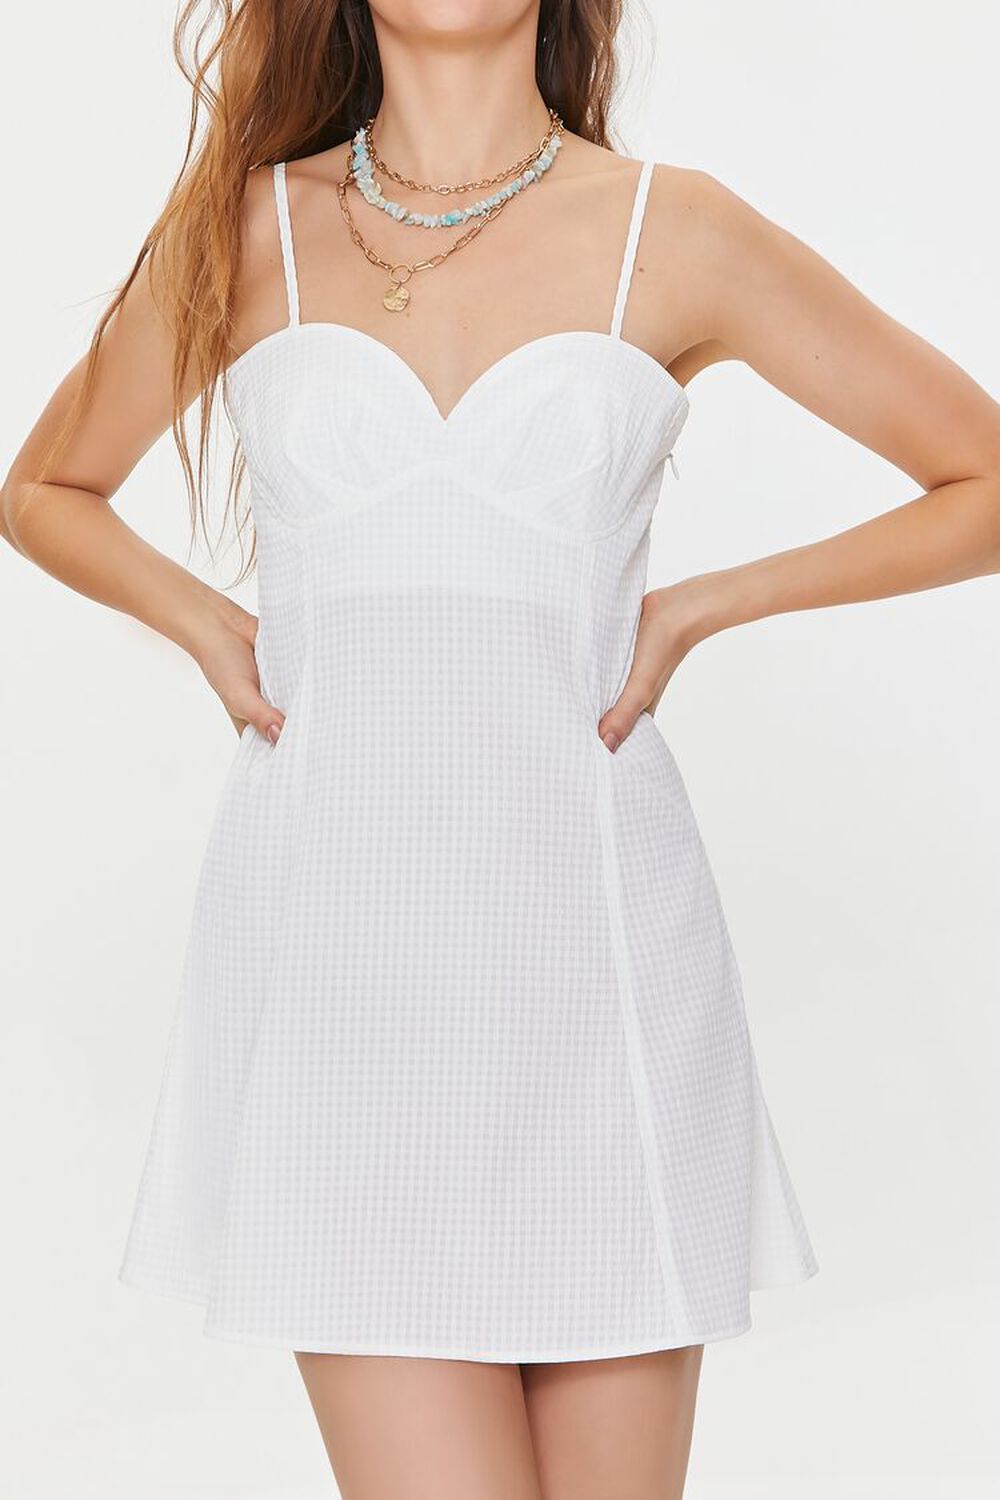 WHITE Sweetheart Gingham Mini Dress, image 2